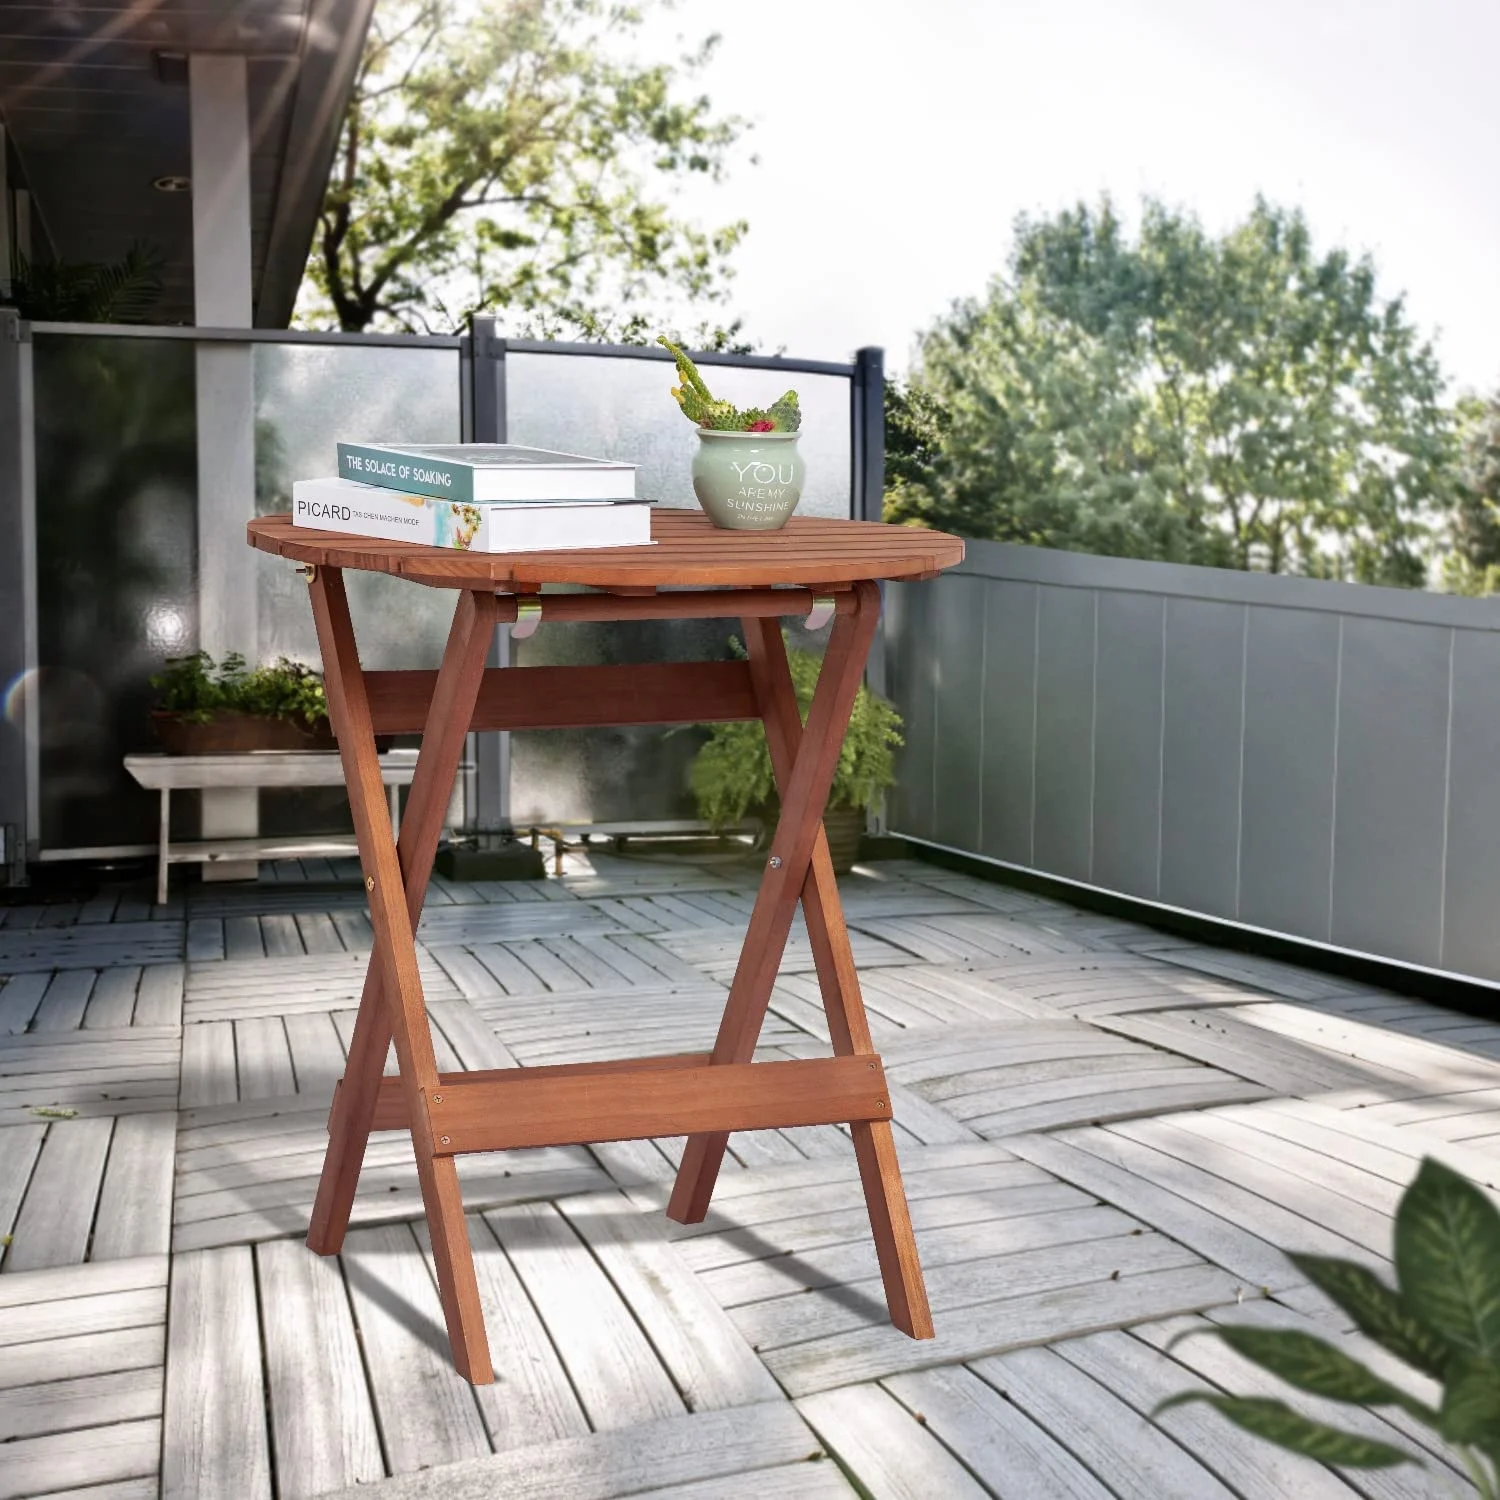 Wood Folding table leg Patio Furniture Outdoor for Backyard Balcony Deck